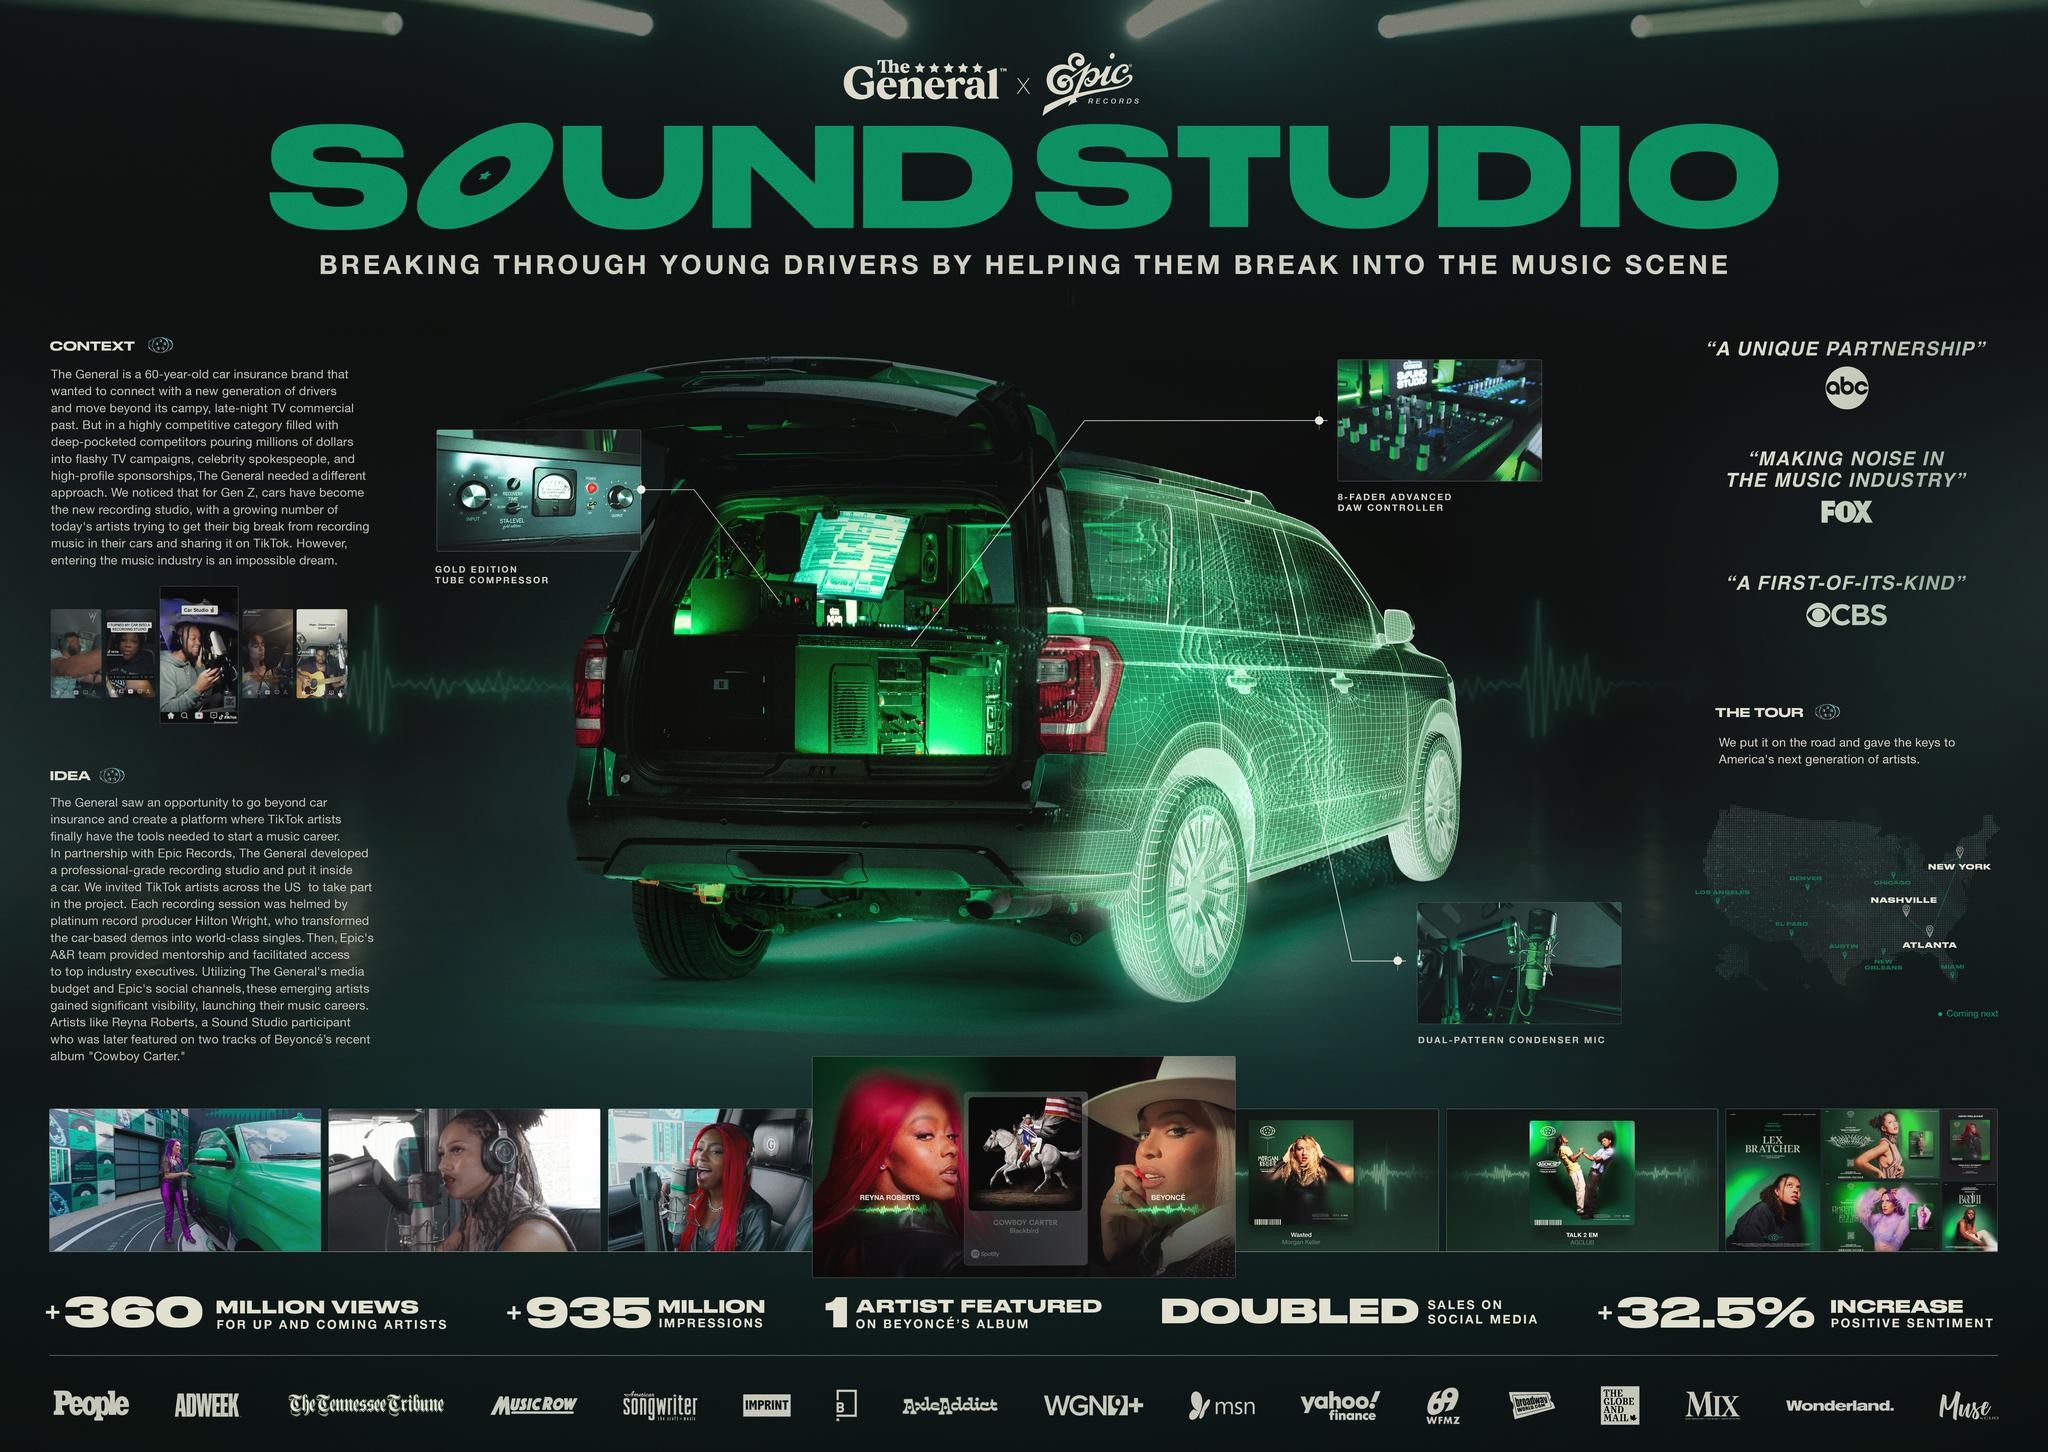 THE SOUND STUDIO